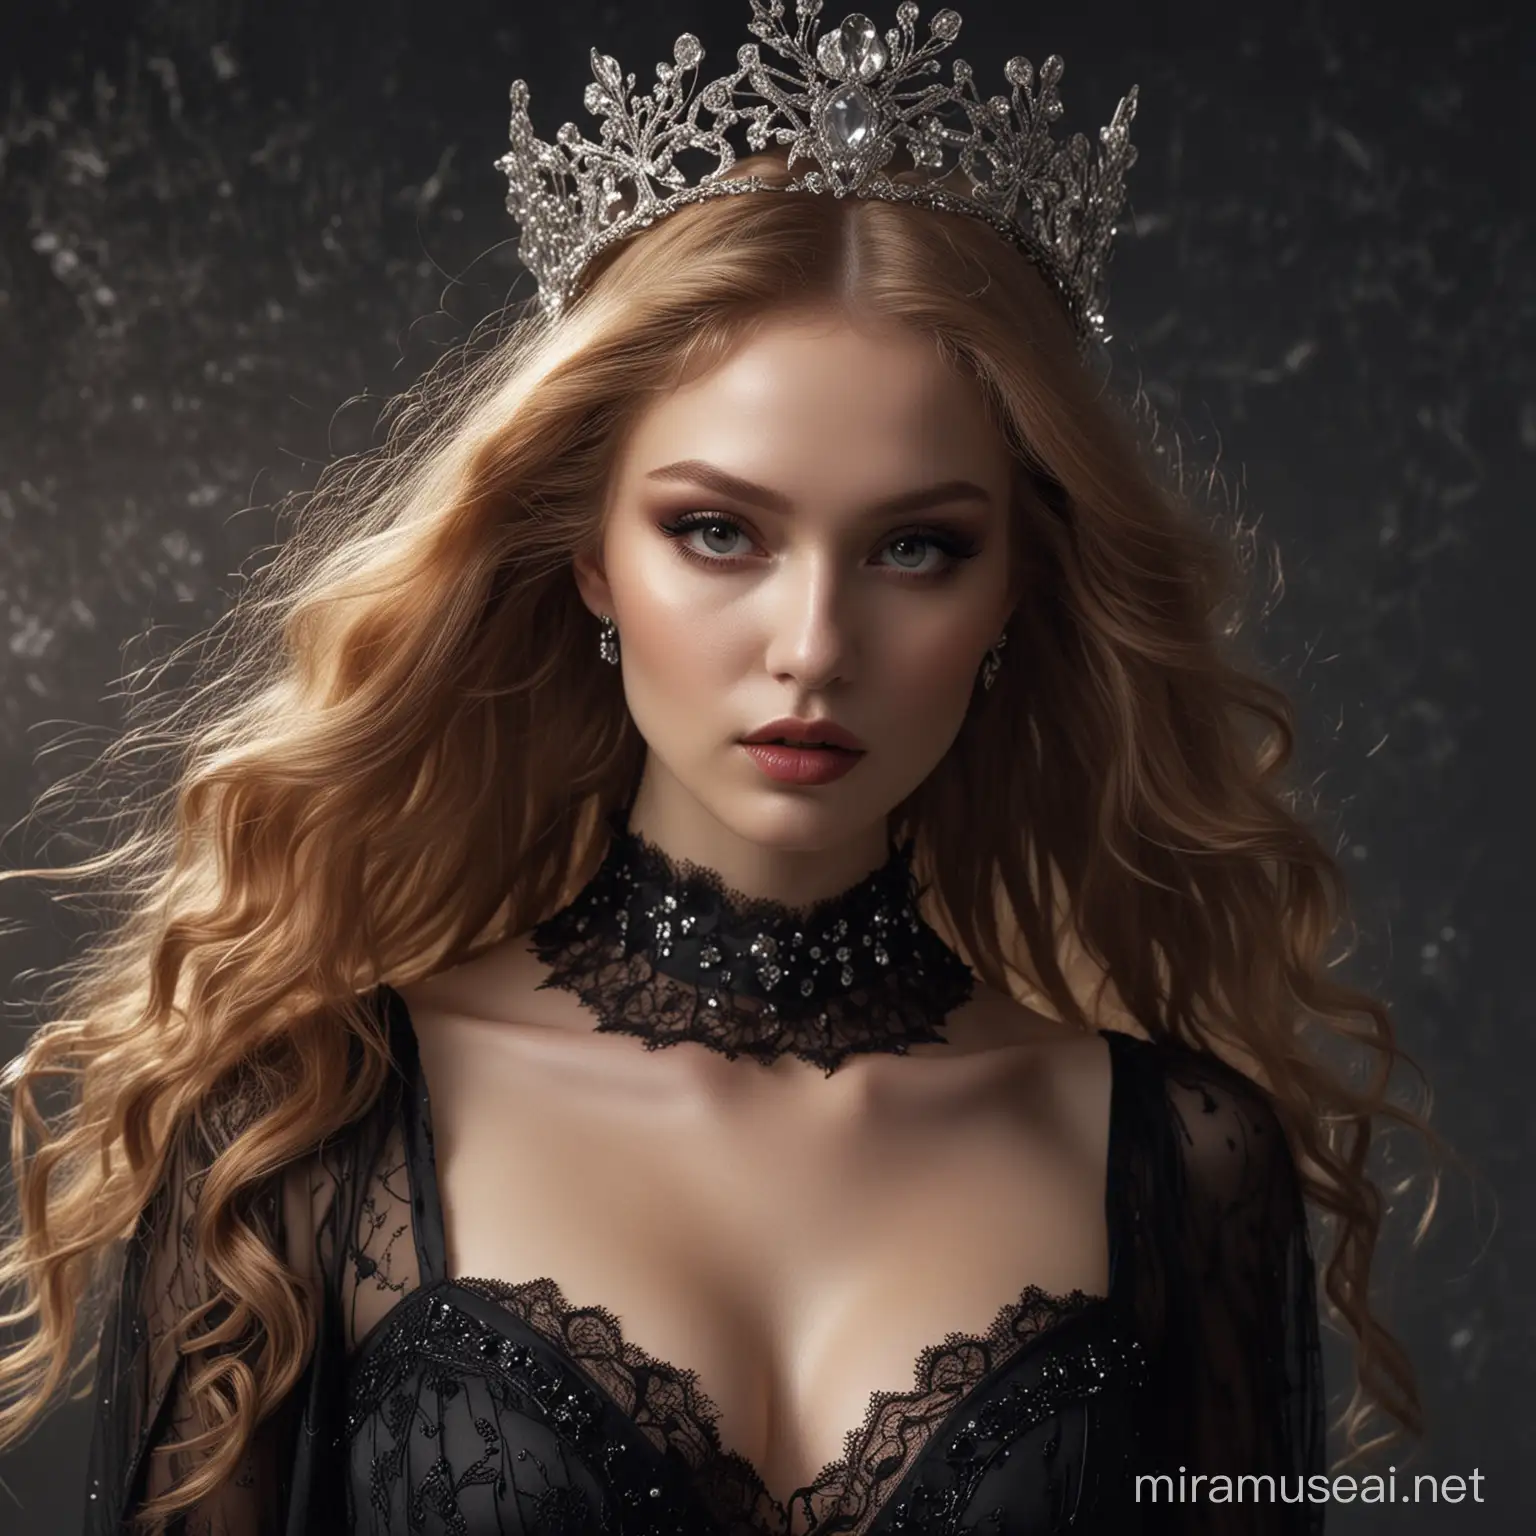 Sensual Vampire Fairy in Futuristic Silk Top with Diamond Crystals